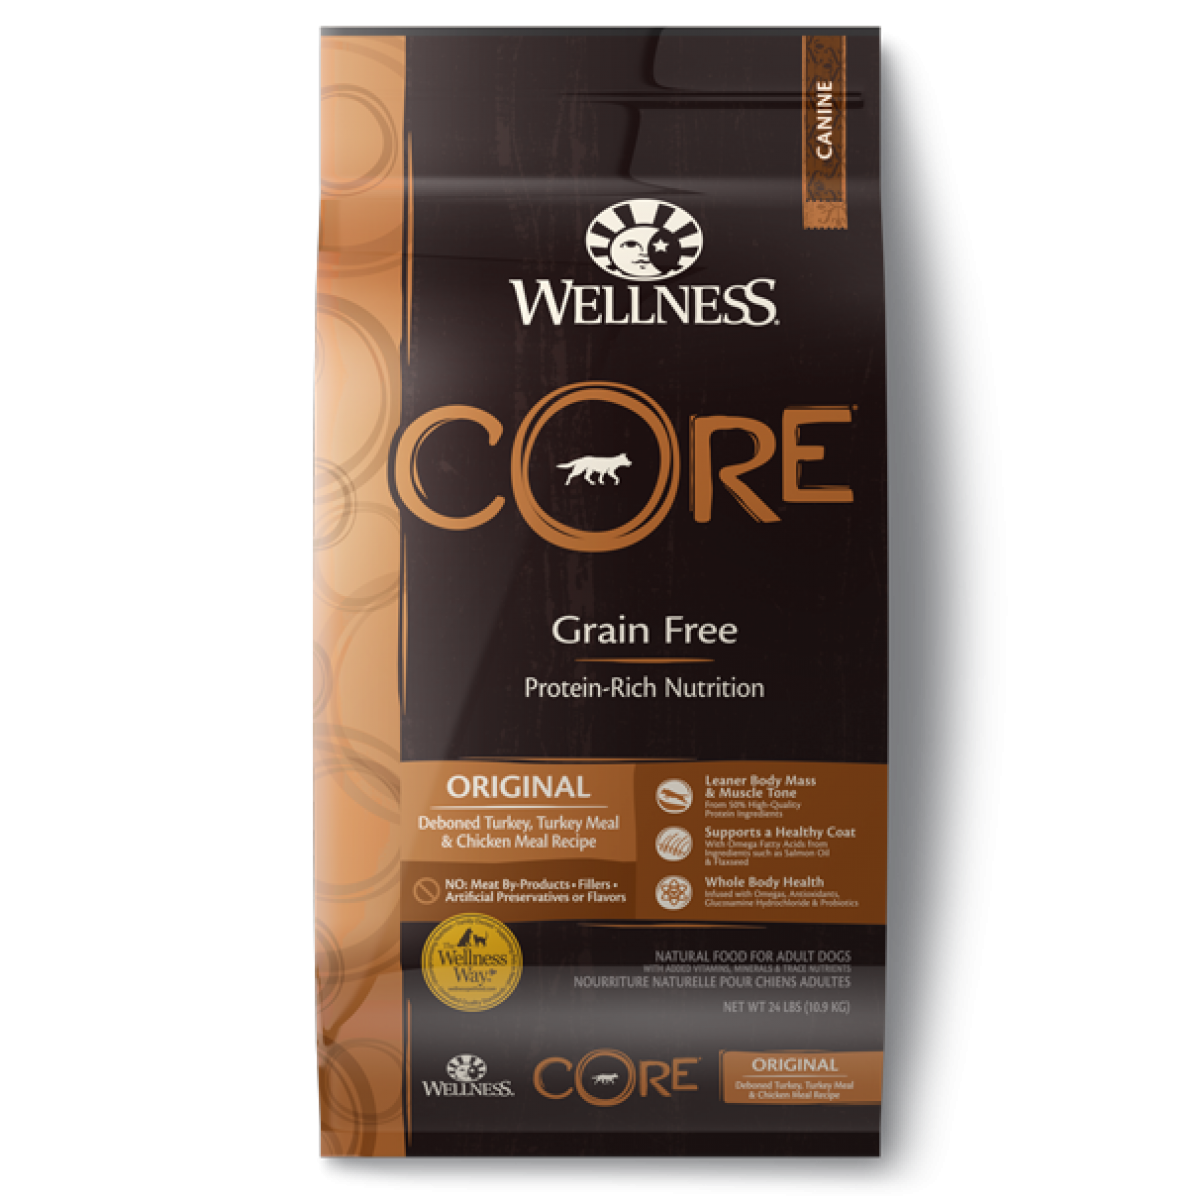 Wellness CORE - Grain Free Dog Food - Original